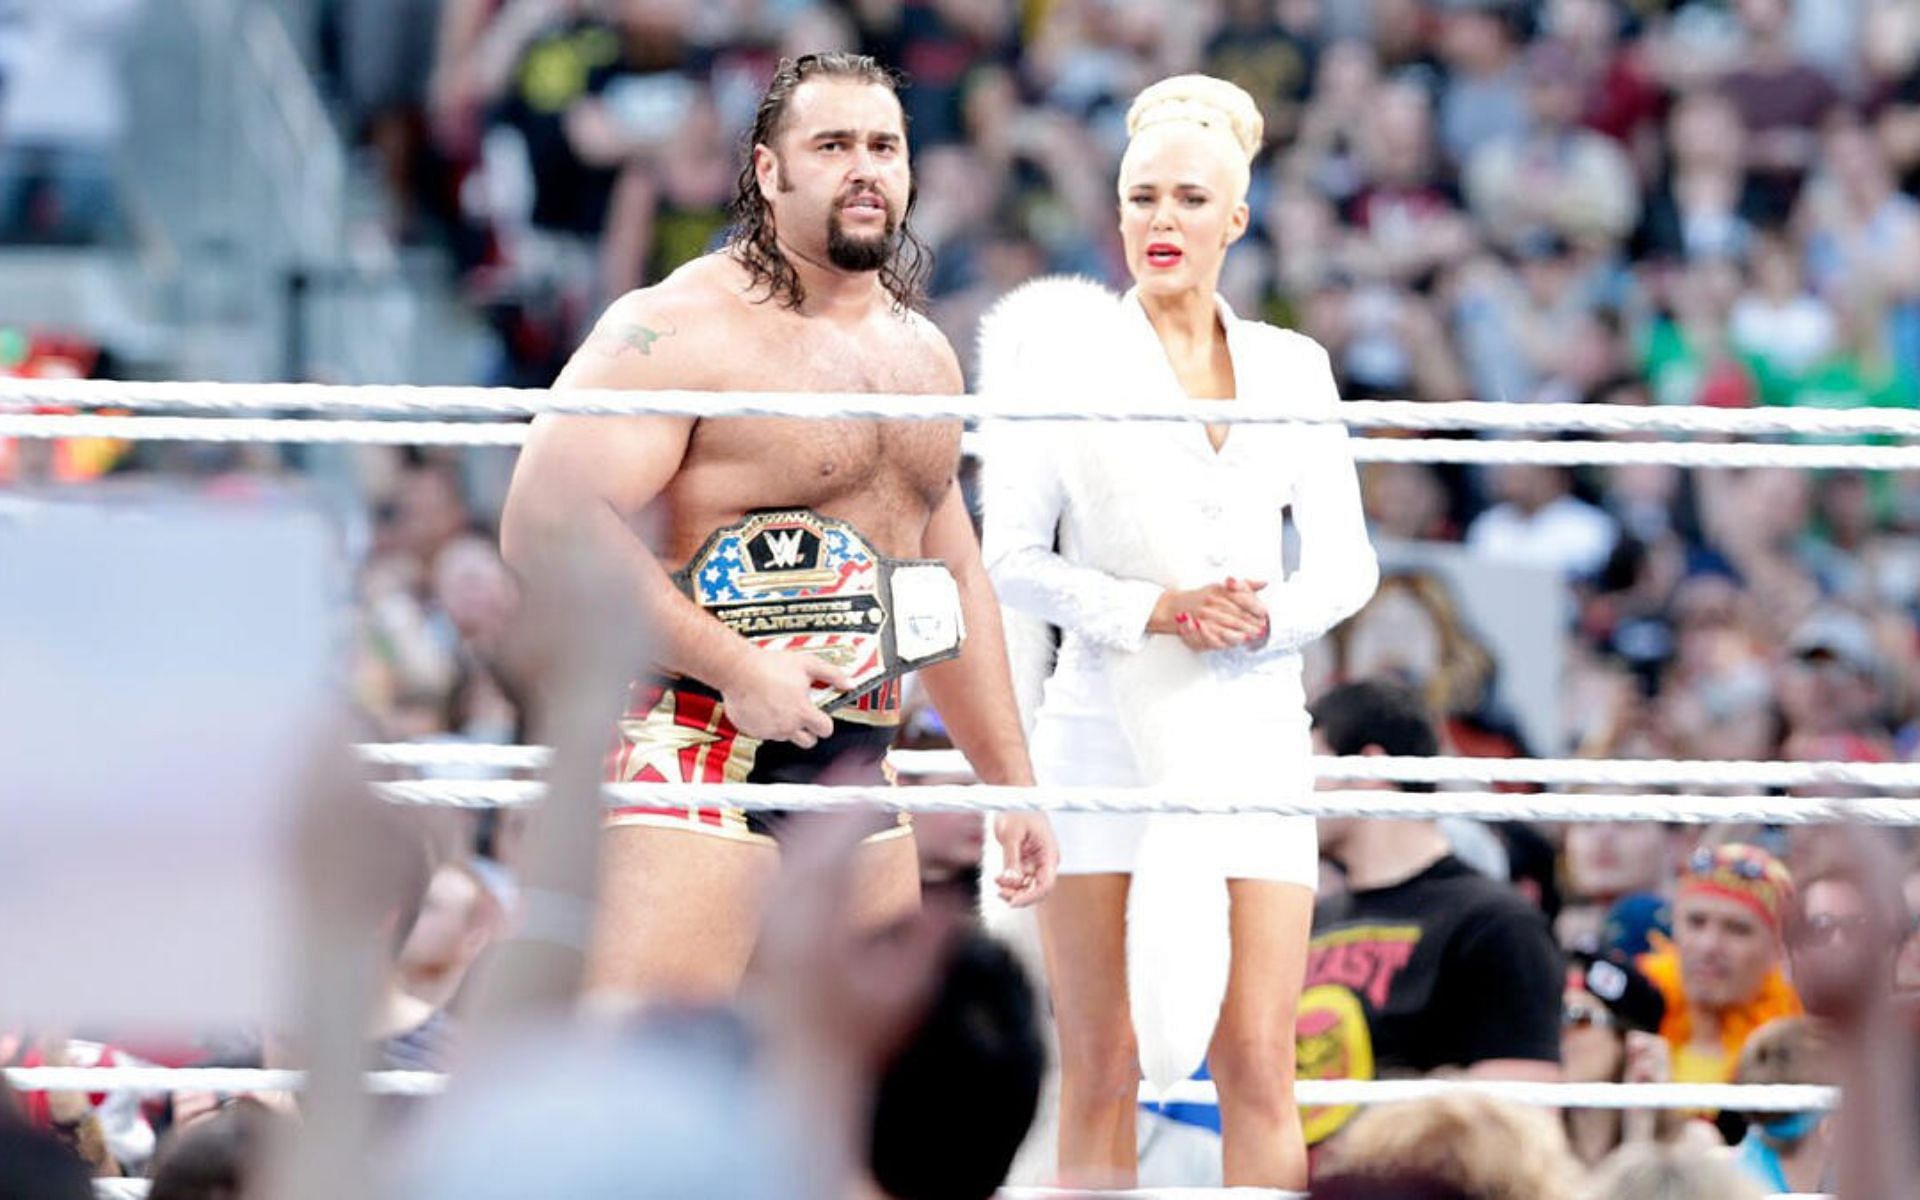 Rusev and Lana in the ring awaiting John Cena at WrestleMania 31.